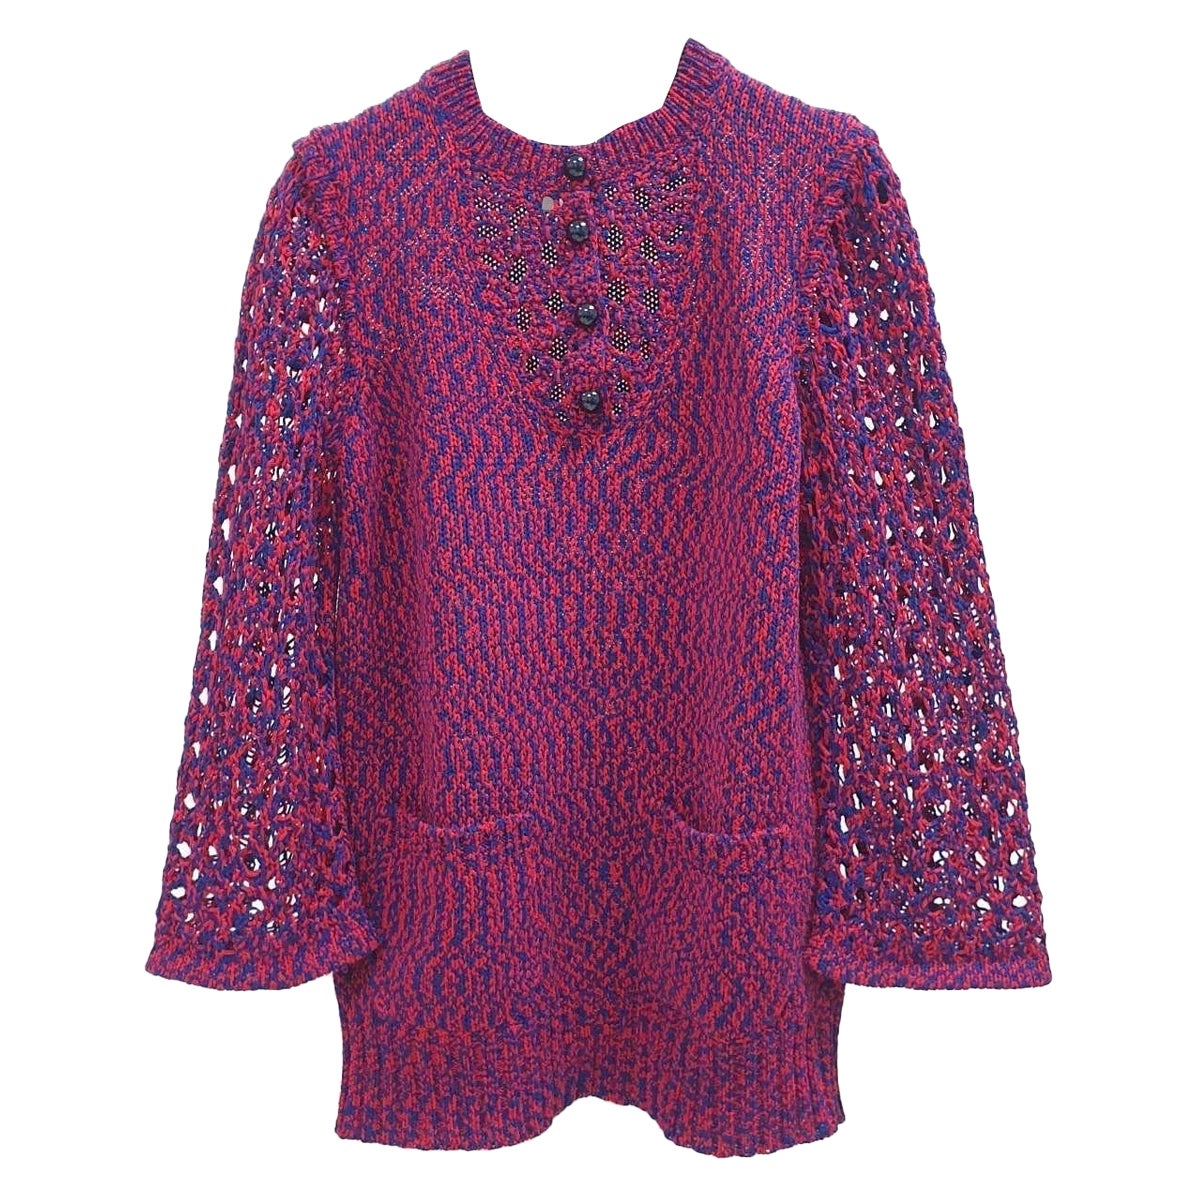 Chanel Keira Knightley Dress Sweater Tops